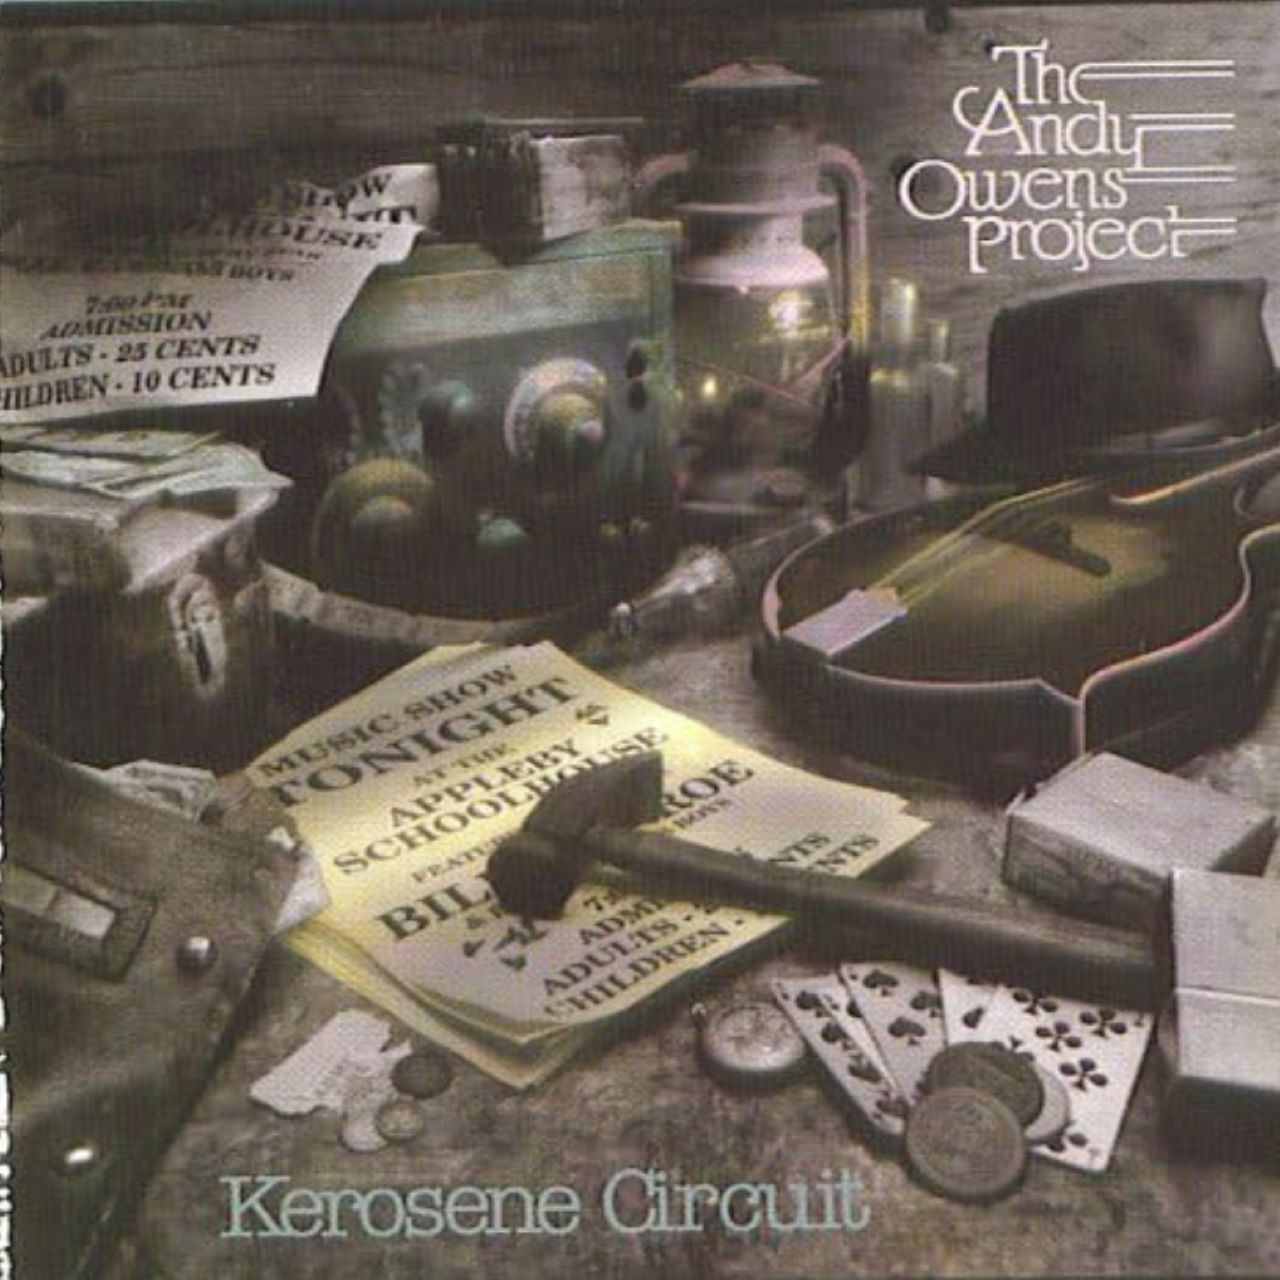 Andy Owens Project – Kerosene Circuit cover album